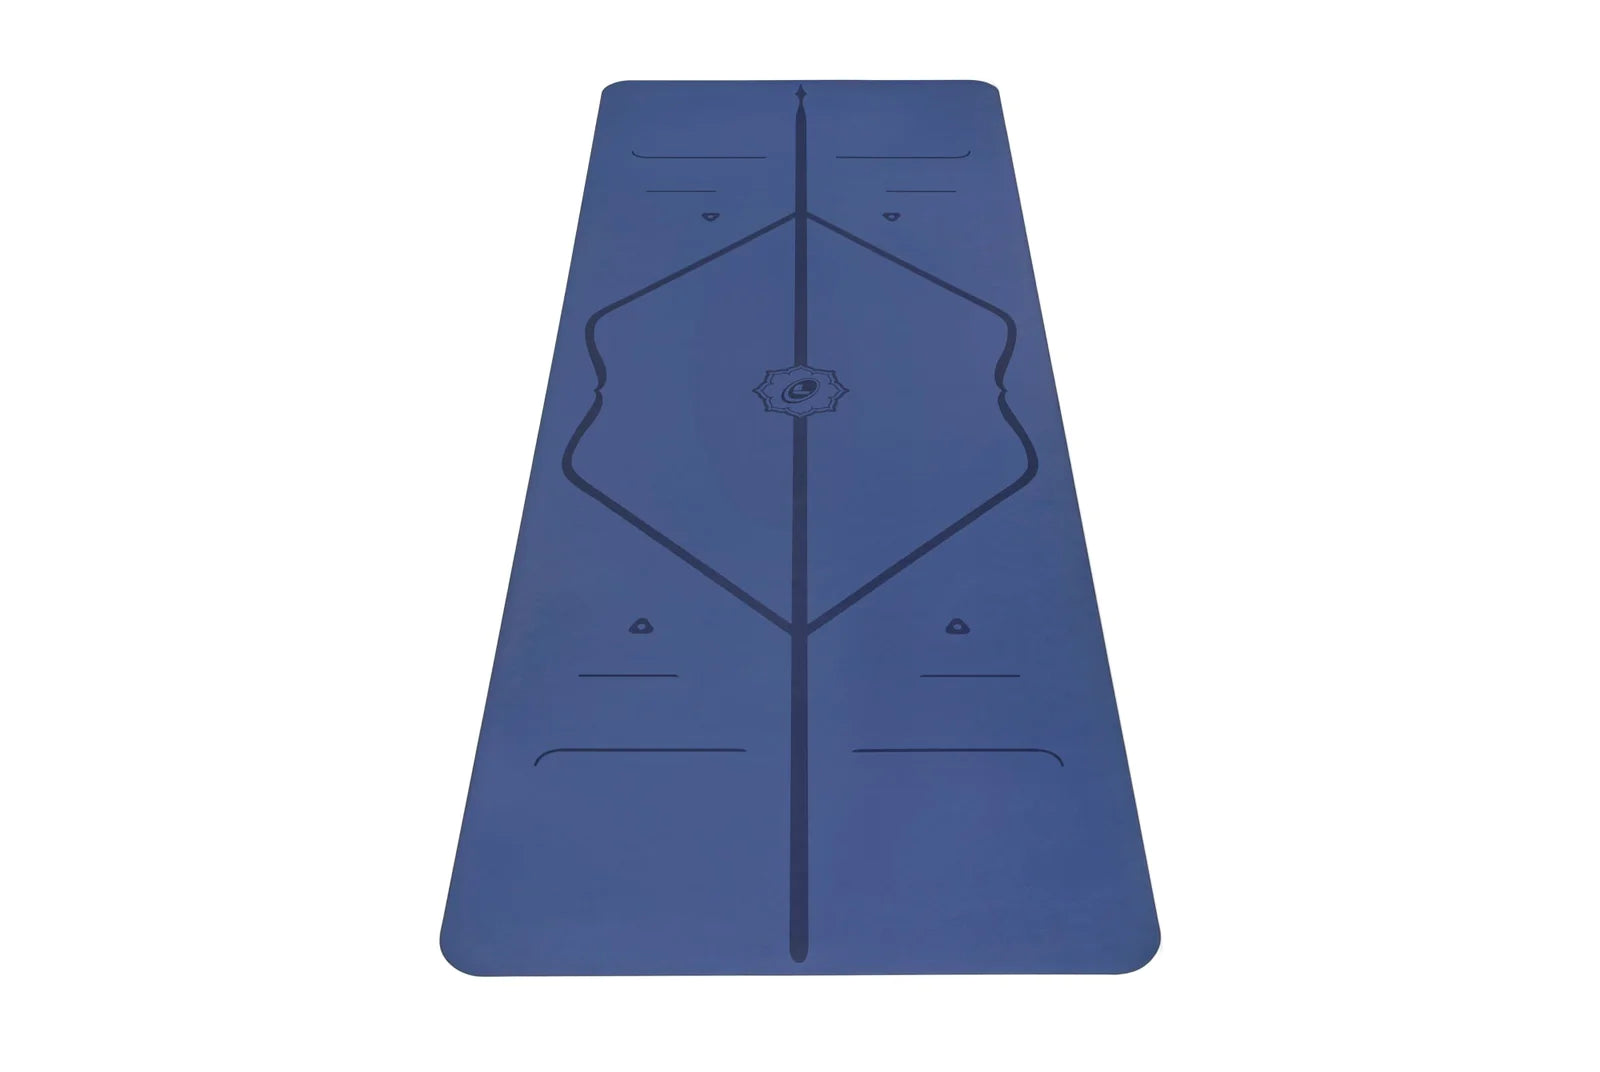 Eco-friendly yoga mat in soothing Dusk Blue color - Liforme Yoga Mat.